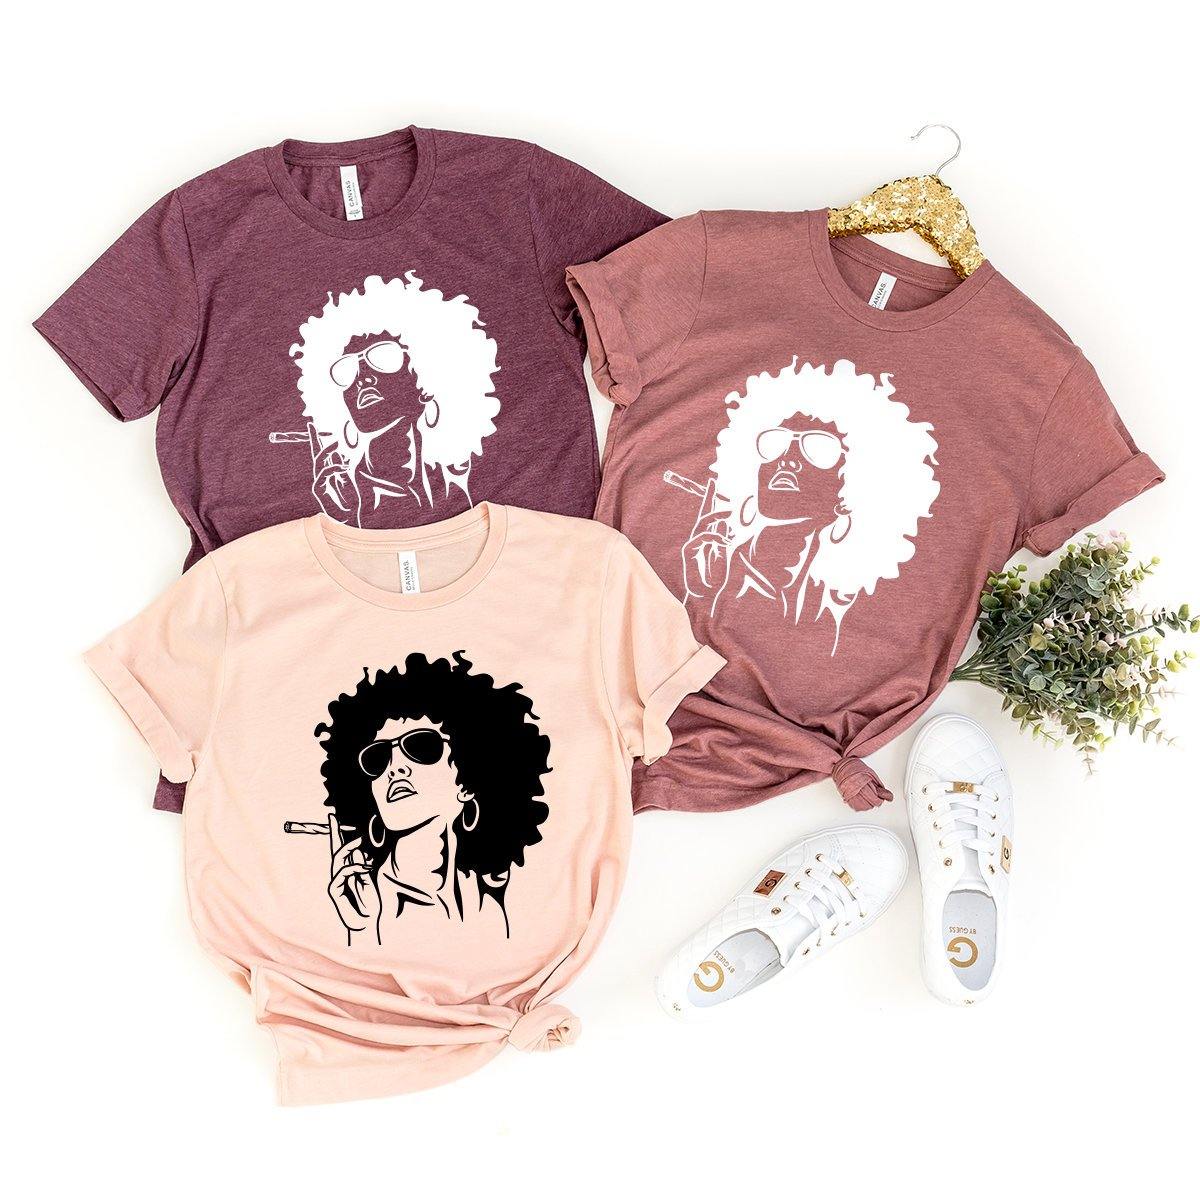 Afro Girl Shirt, Weeding Shirt,, Weeding Tee, Funny Weeding Shirt, Marijuana Girl Shirt, Stoner Shirt, Black women weed shirt - Fastdeliverytees.com